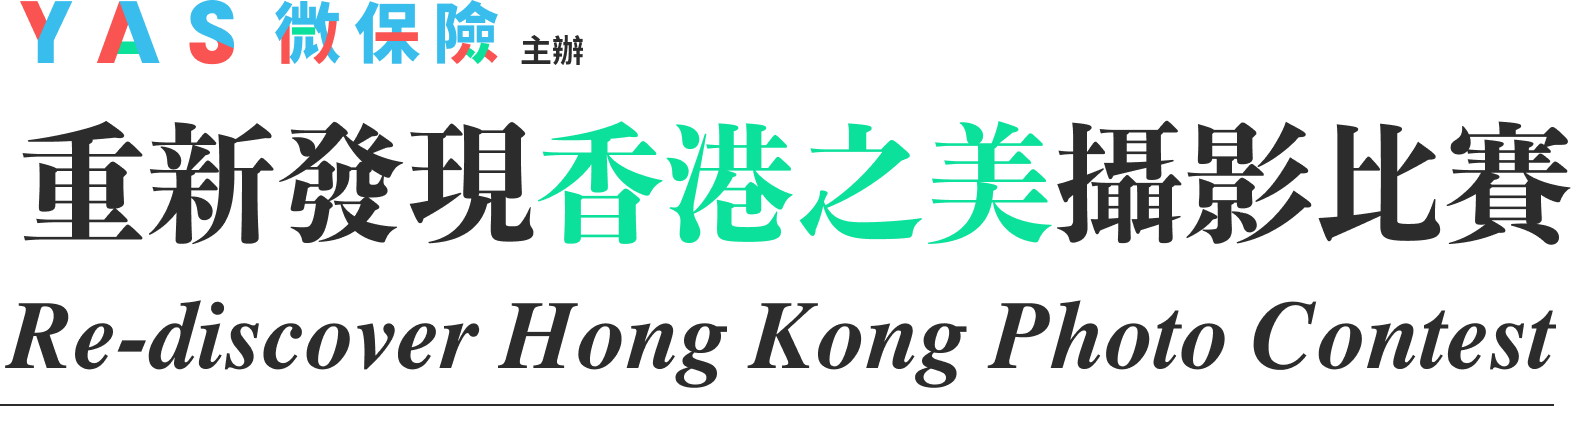 Re-discover Hong Kong Photo Contest